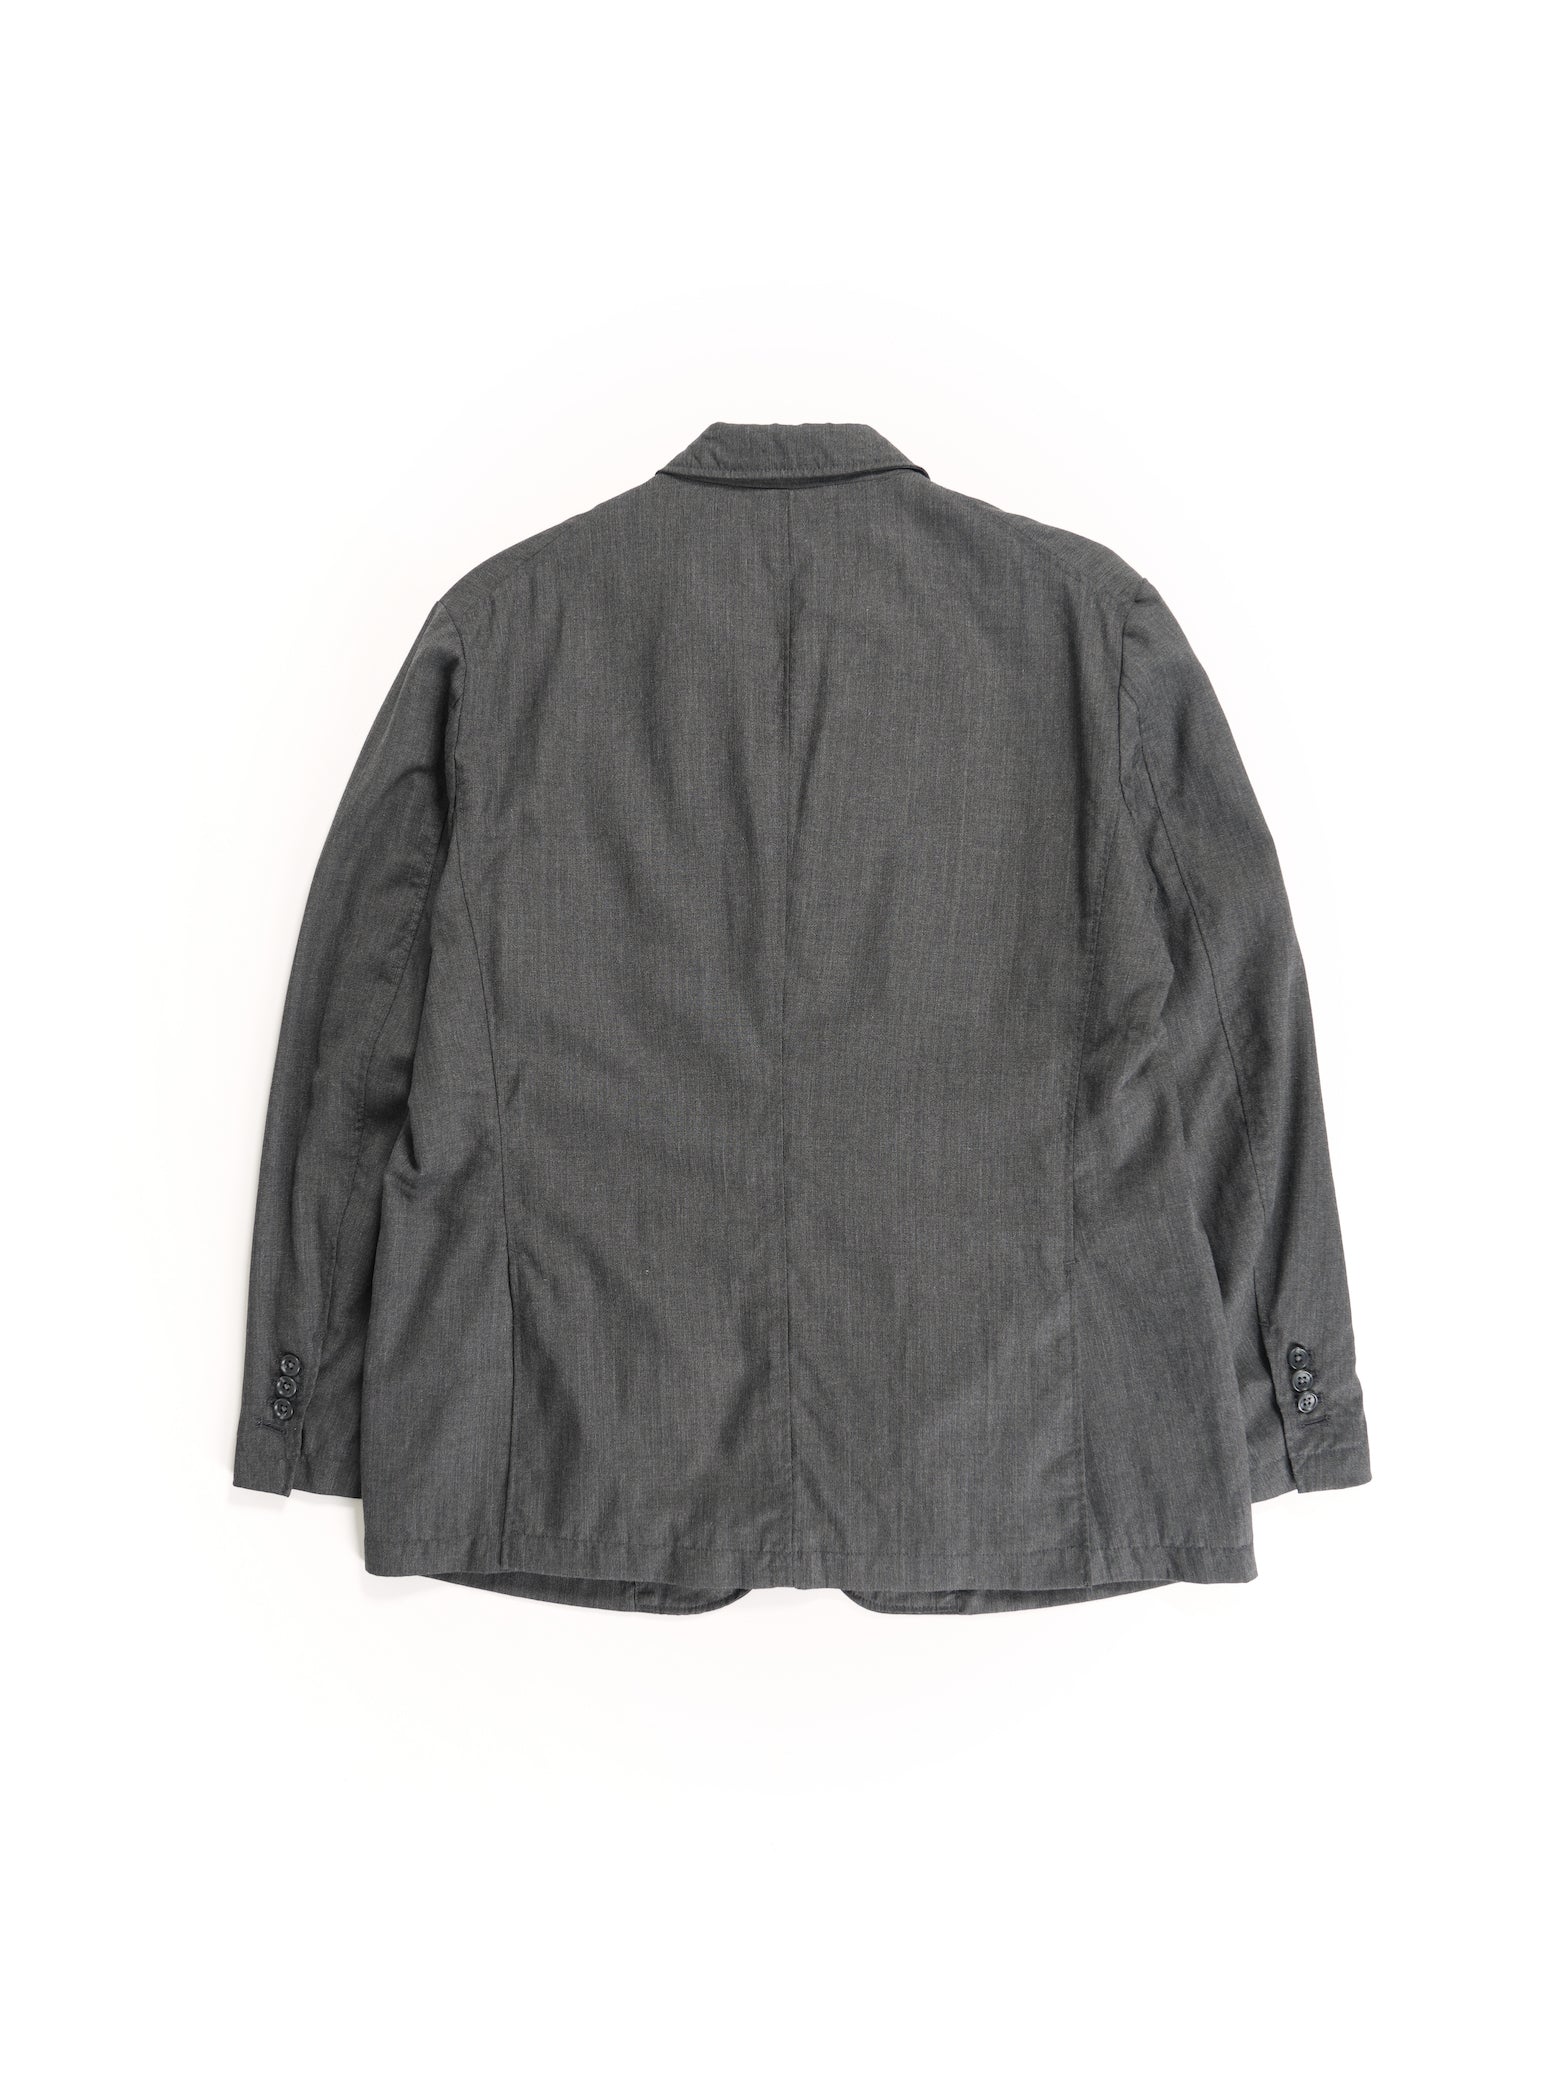 Andover Jacket - Charcoal Tropical Wool